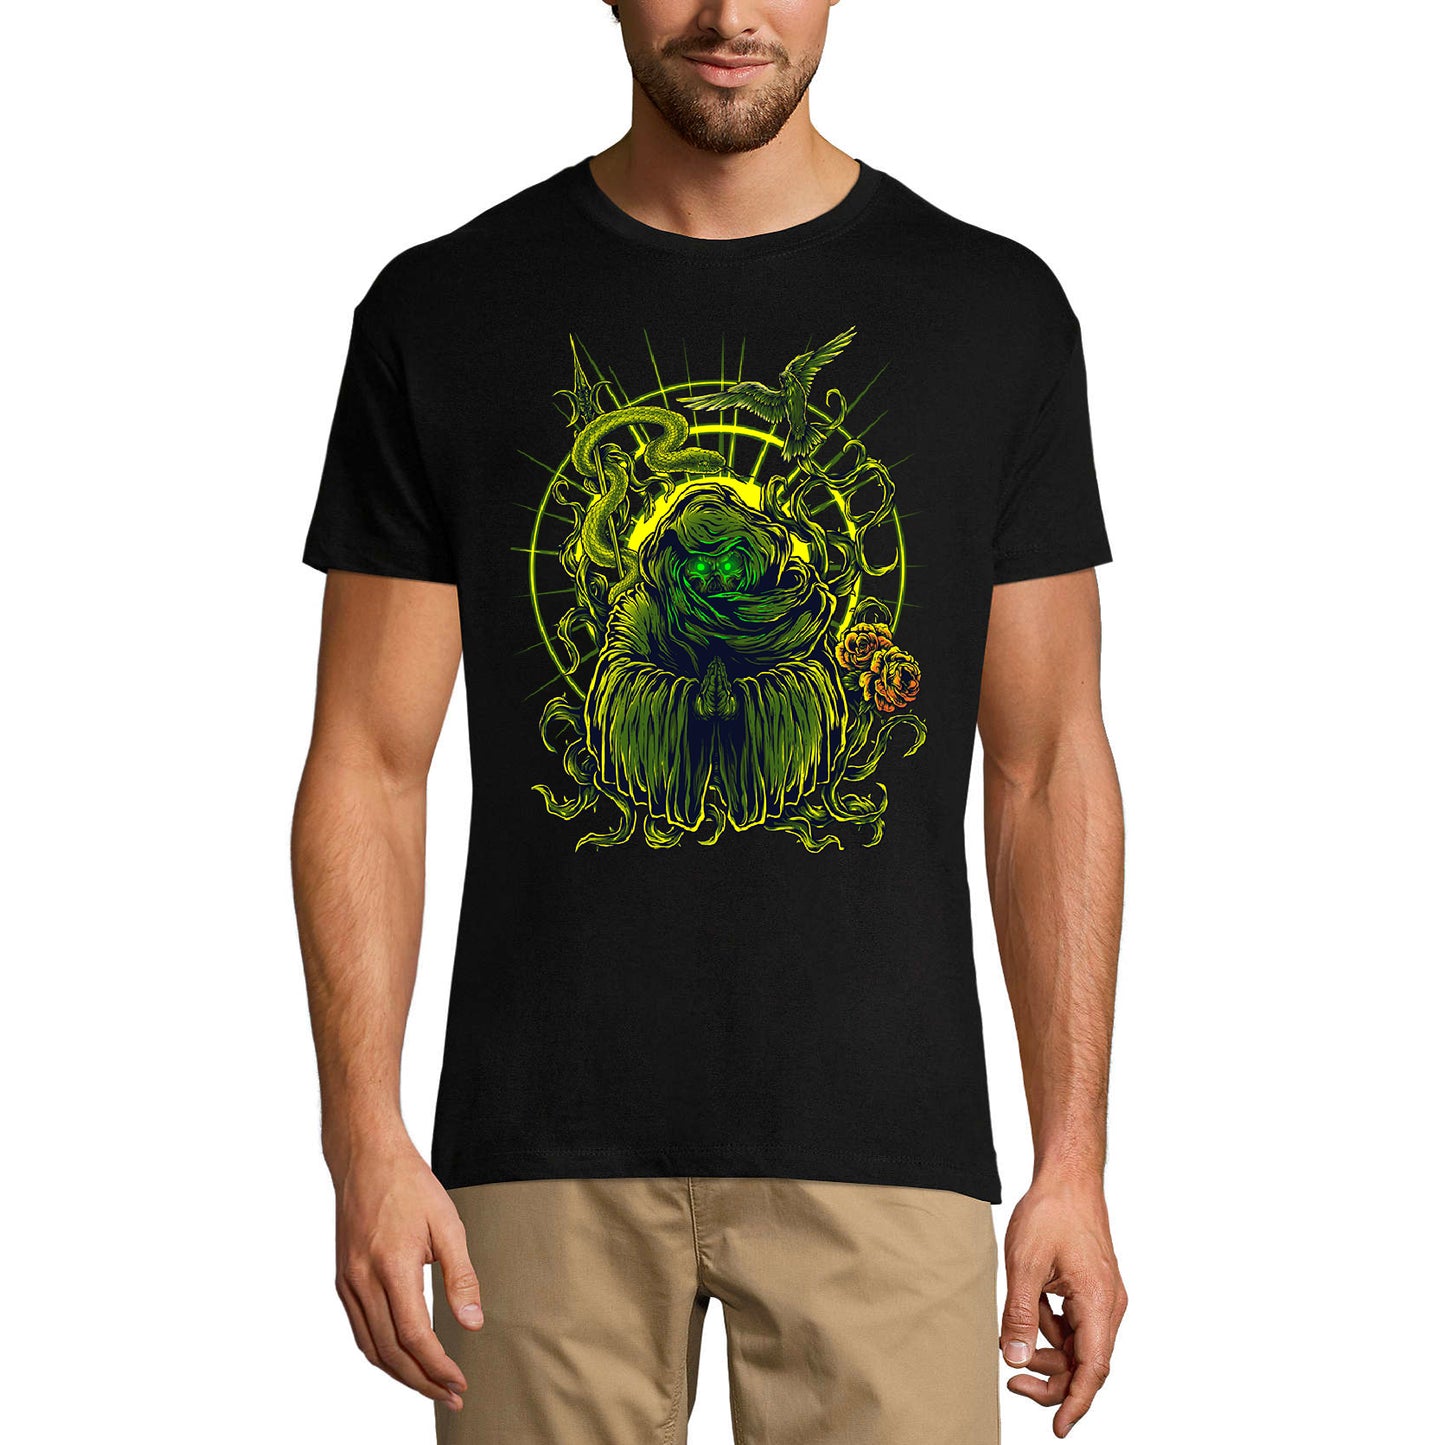 ULTRABASIC Graphic Men's T-Shirt Prayer - Scary Shirt - Snakes and Roses